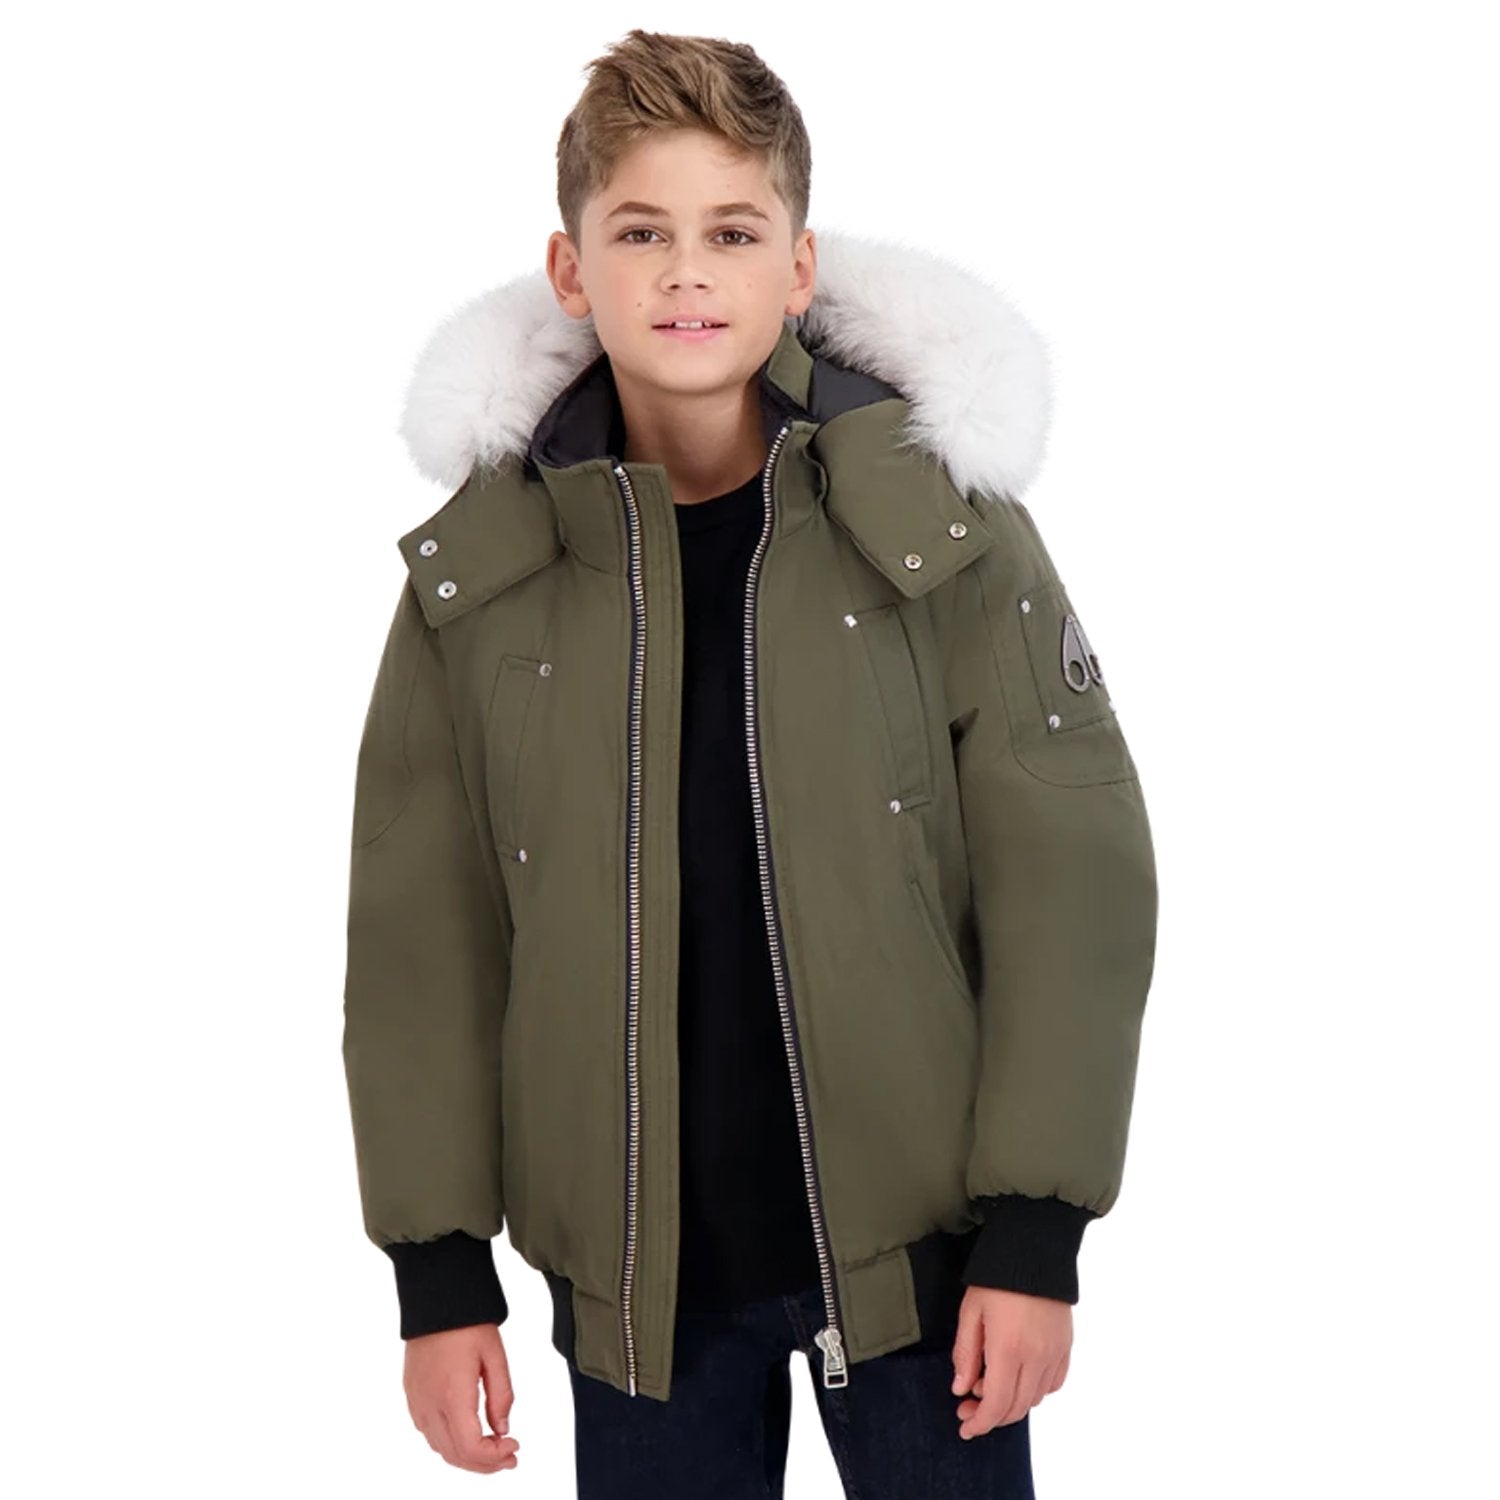 MOOSE KNUCKLES Kid's Bomber Jacket - Color: Army Natural - Kids Premium Clothing -